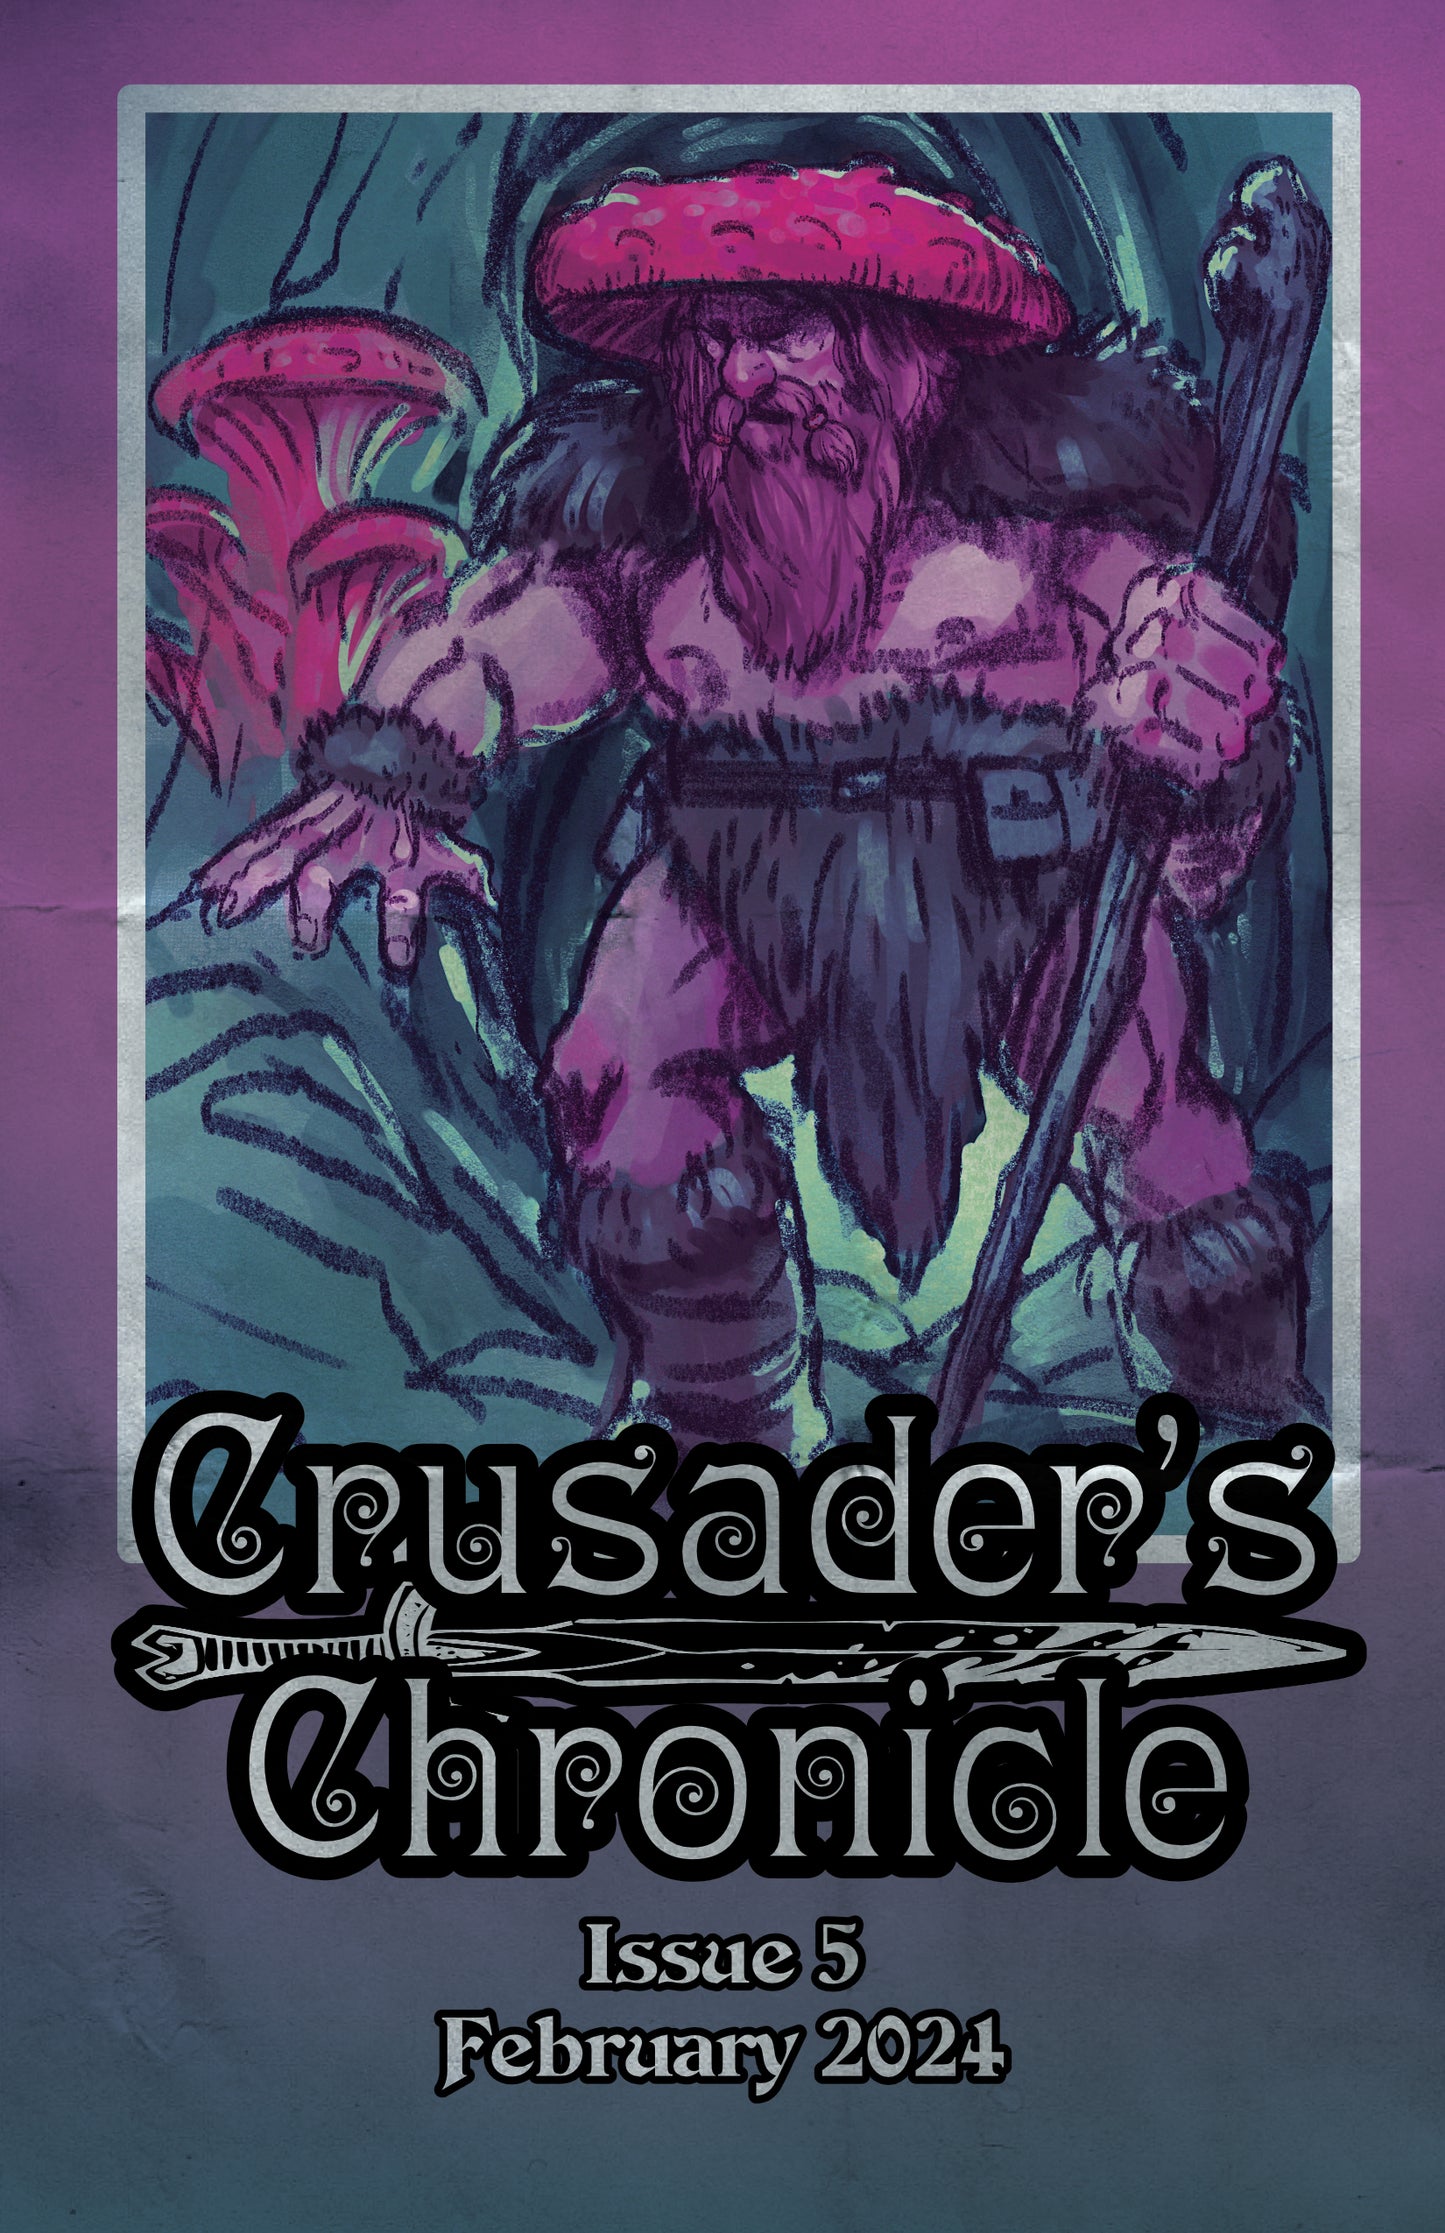 Crusader's Chronicle Issue 5 - February 2024 (POD+PDF)